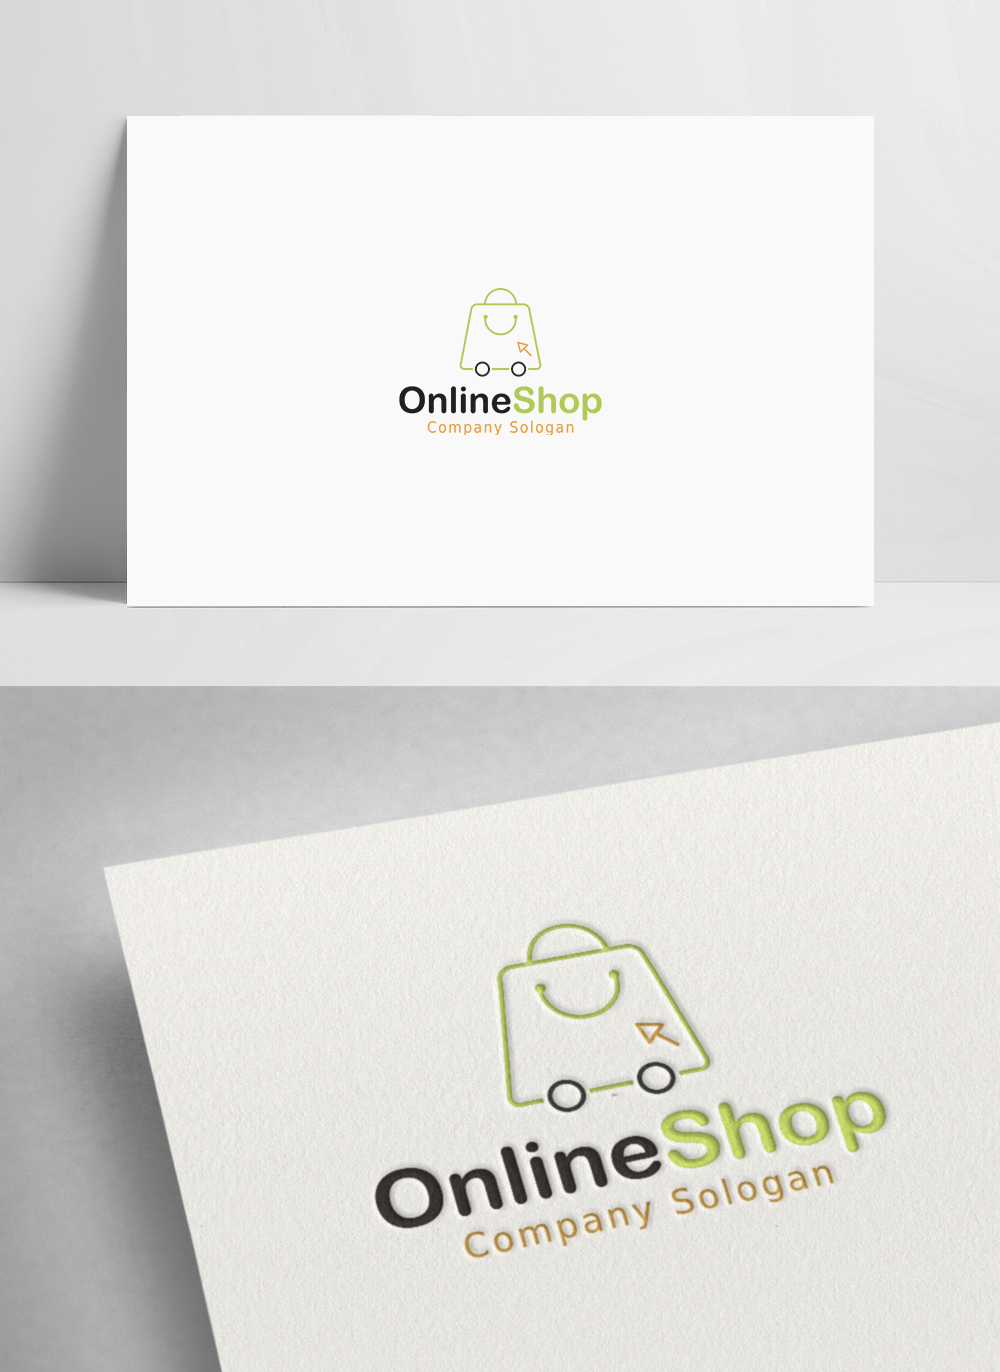 Linear Online Shop Logo Template Image Picture Free Download 450012210 Lovepik Com